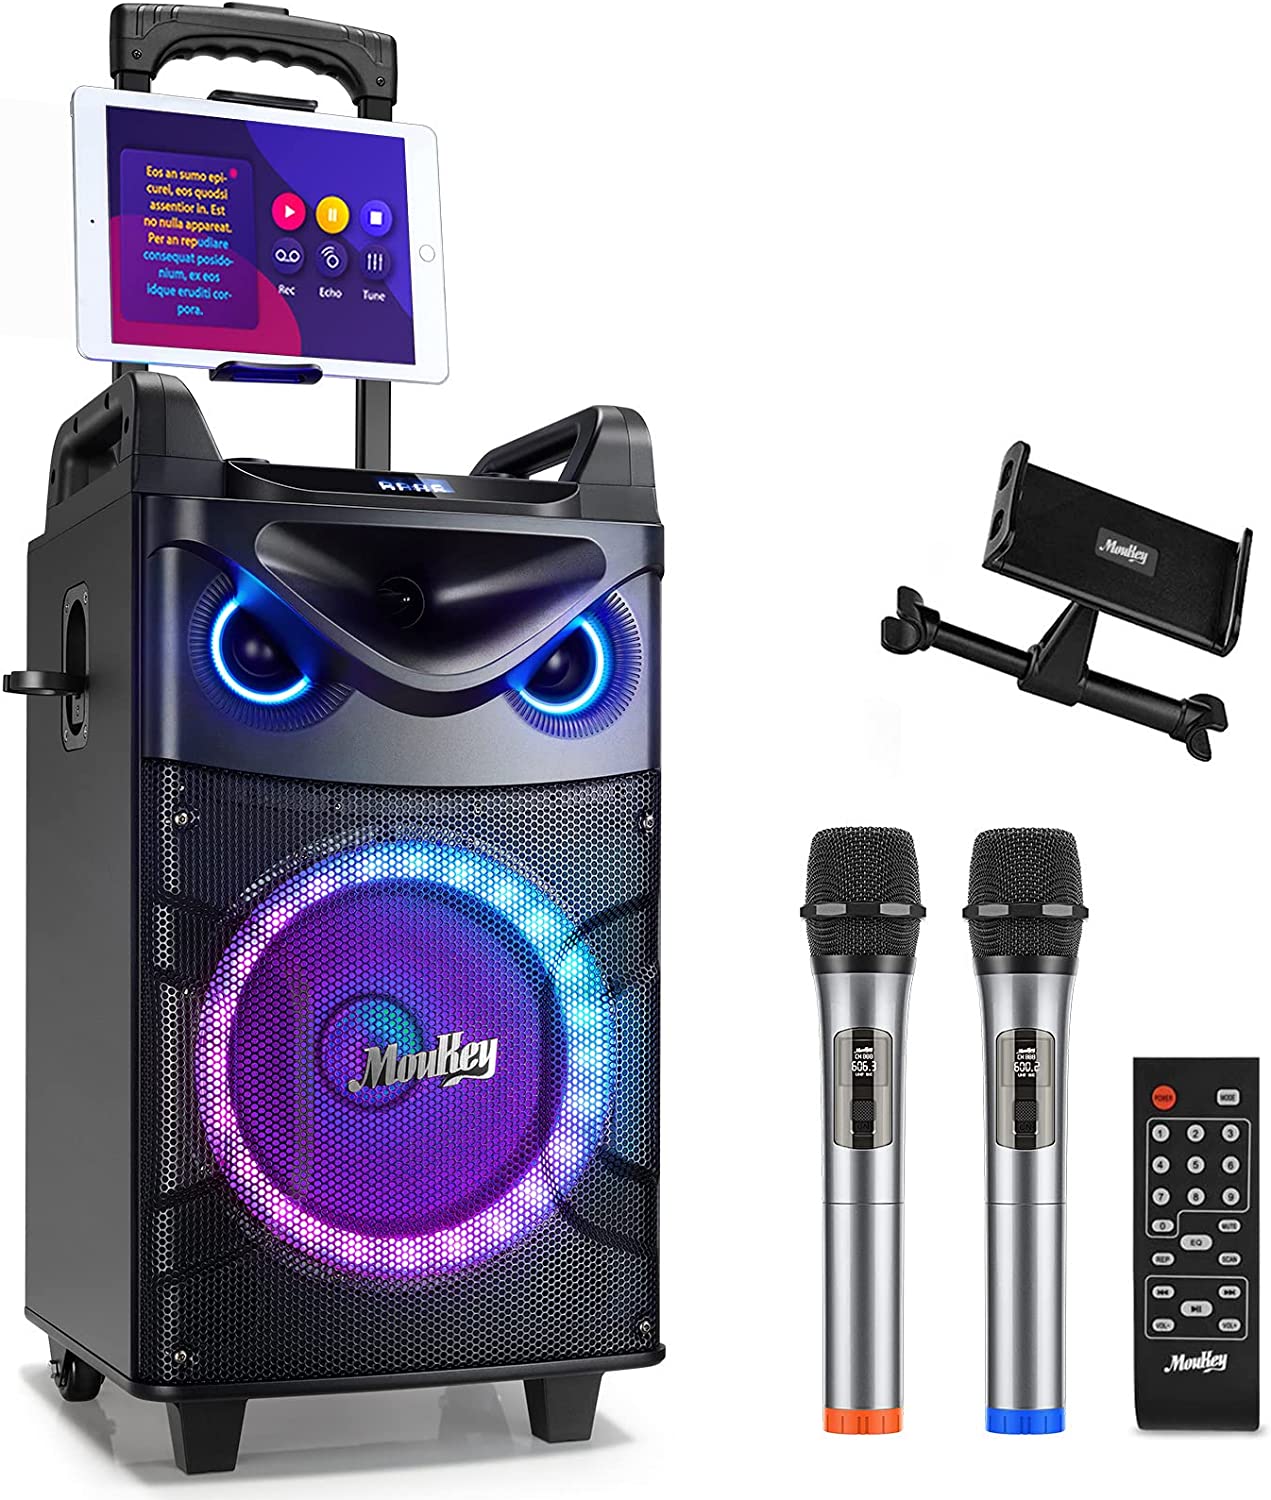 Karaoke USA GF842 DVD/CDG/MP3G Karaoke Machine with 7 TFT Color Screen,  Record, Bluetooth and LED Sync Lights